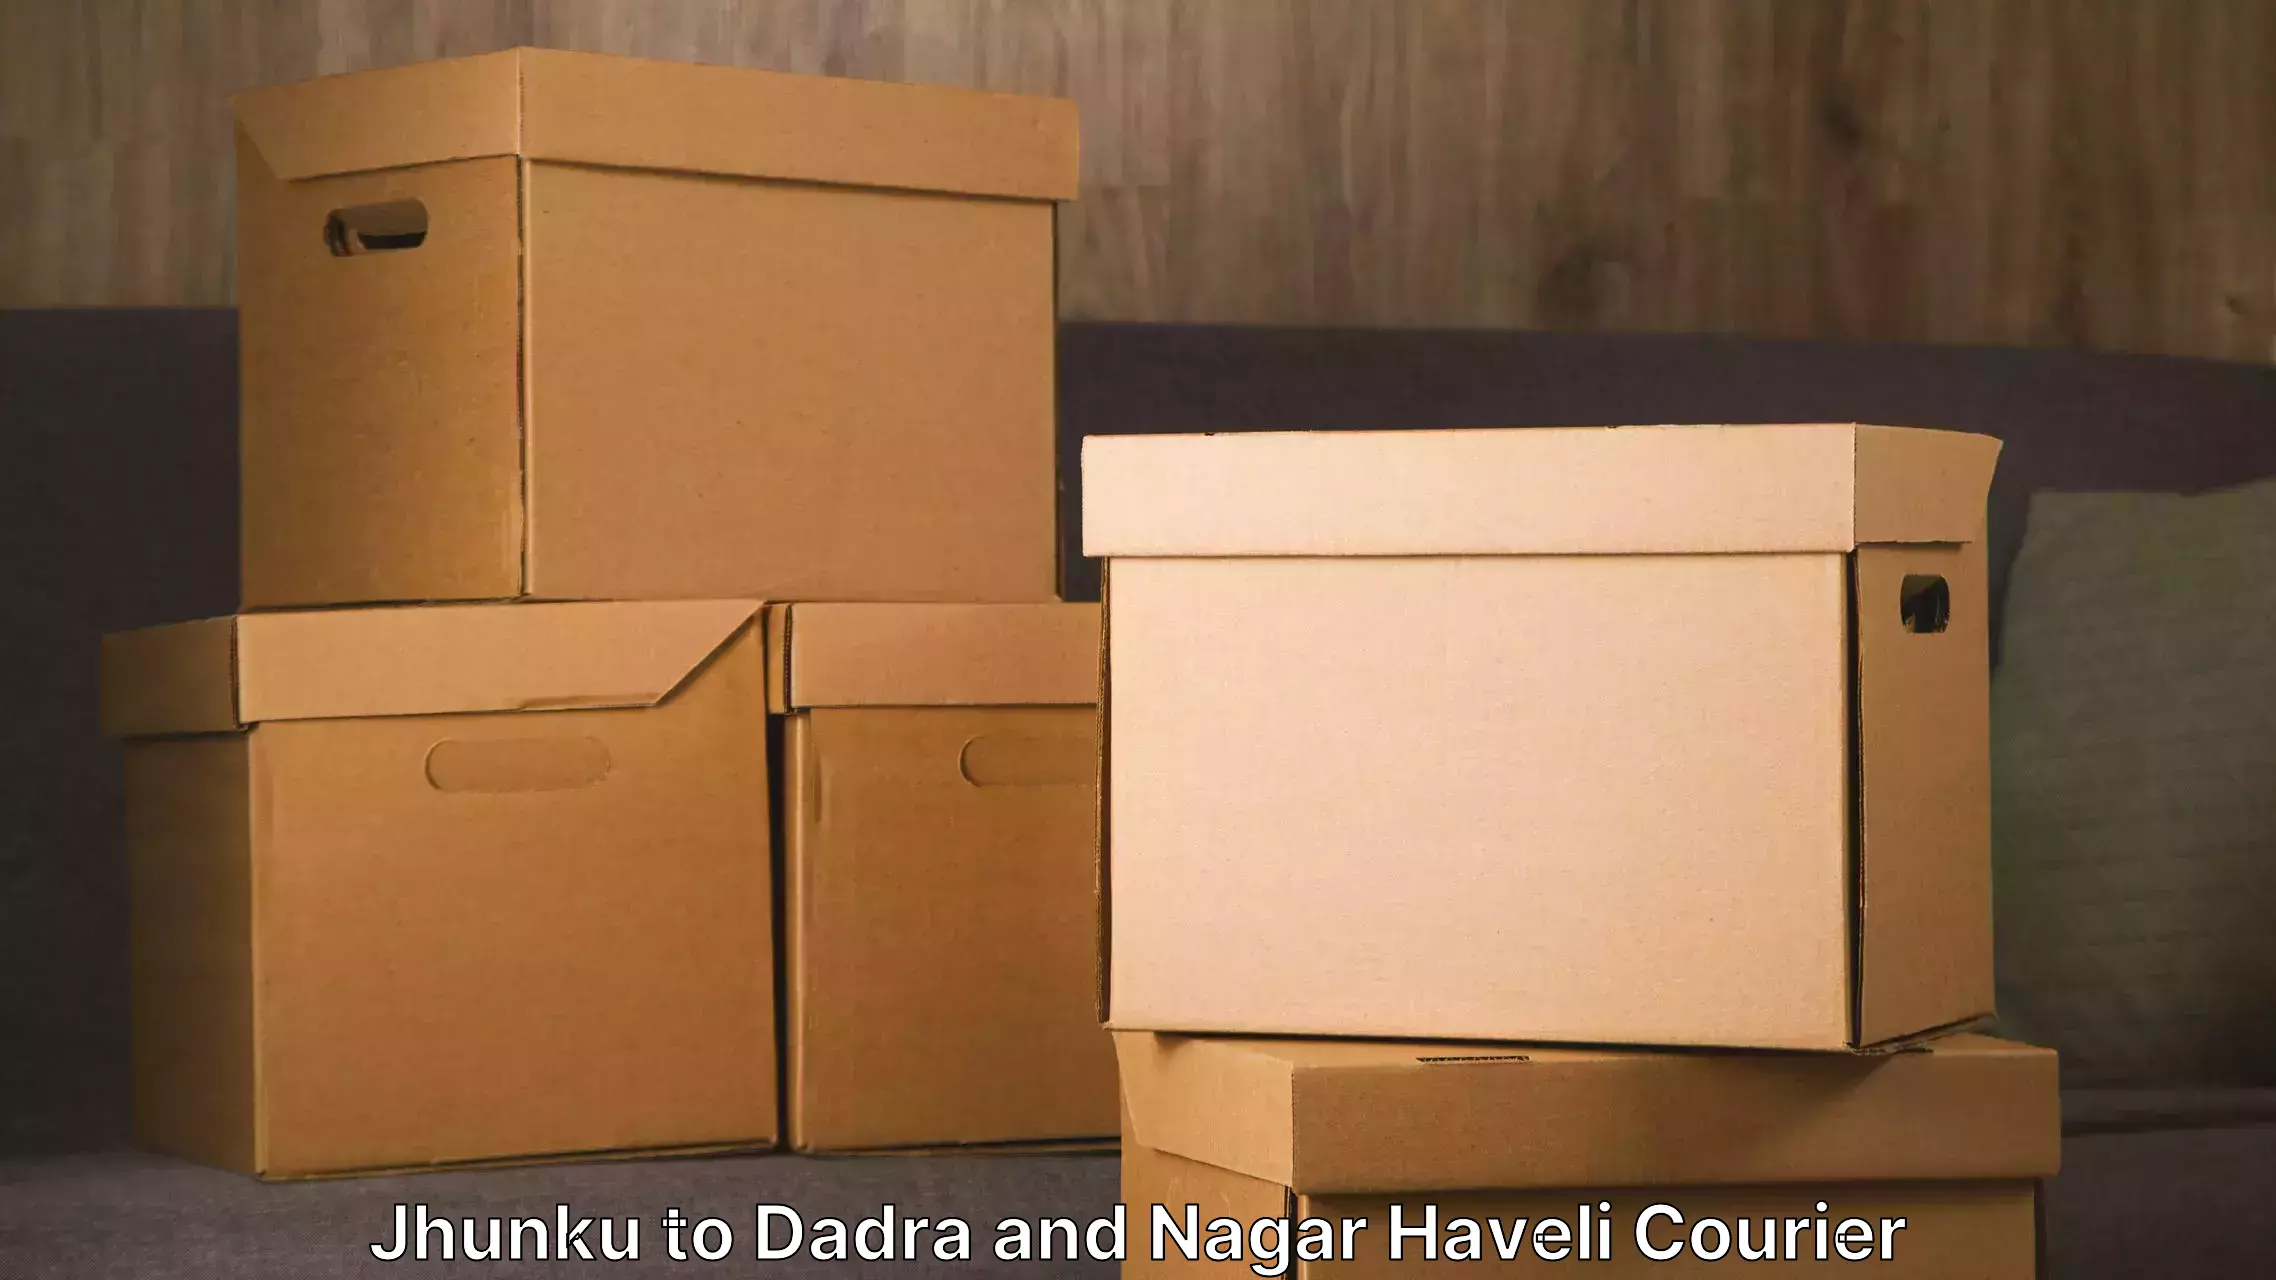 Furniture moving experts Jhunku to Dadra and Nagar Haveli